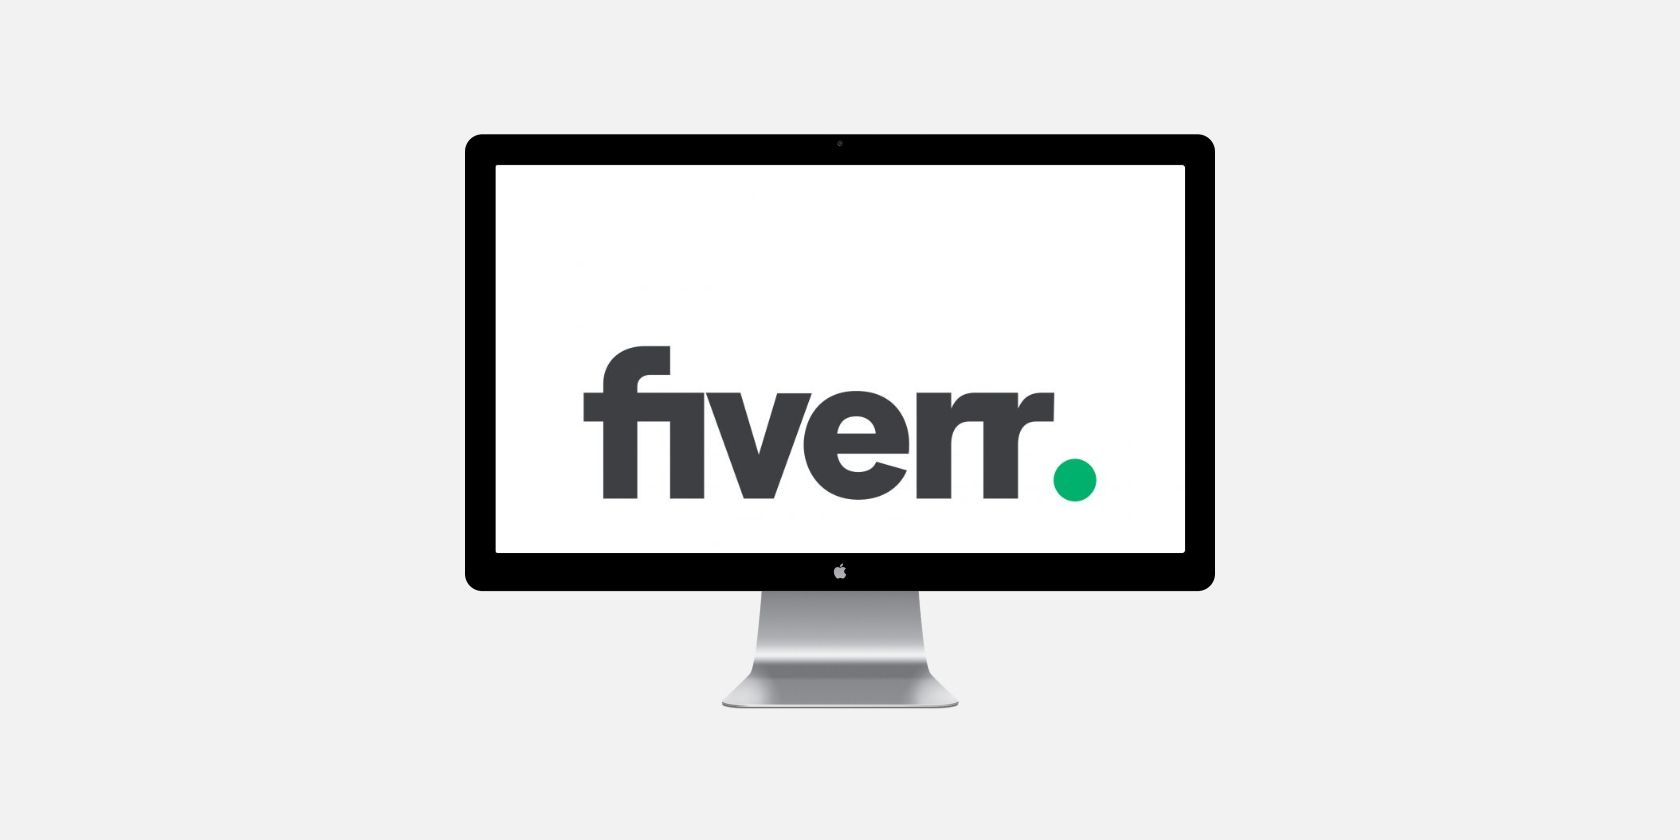 Mock-Up of Fiverr Logo Displayed on a computer